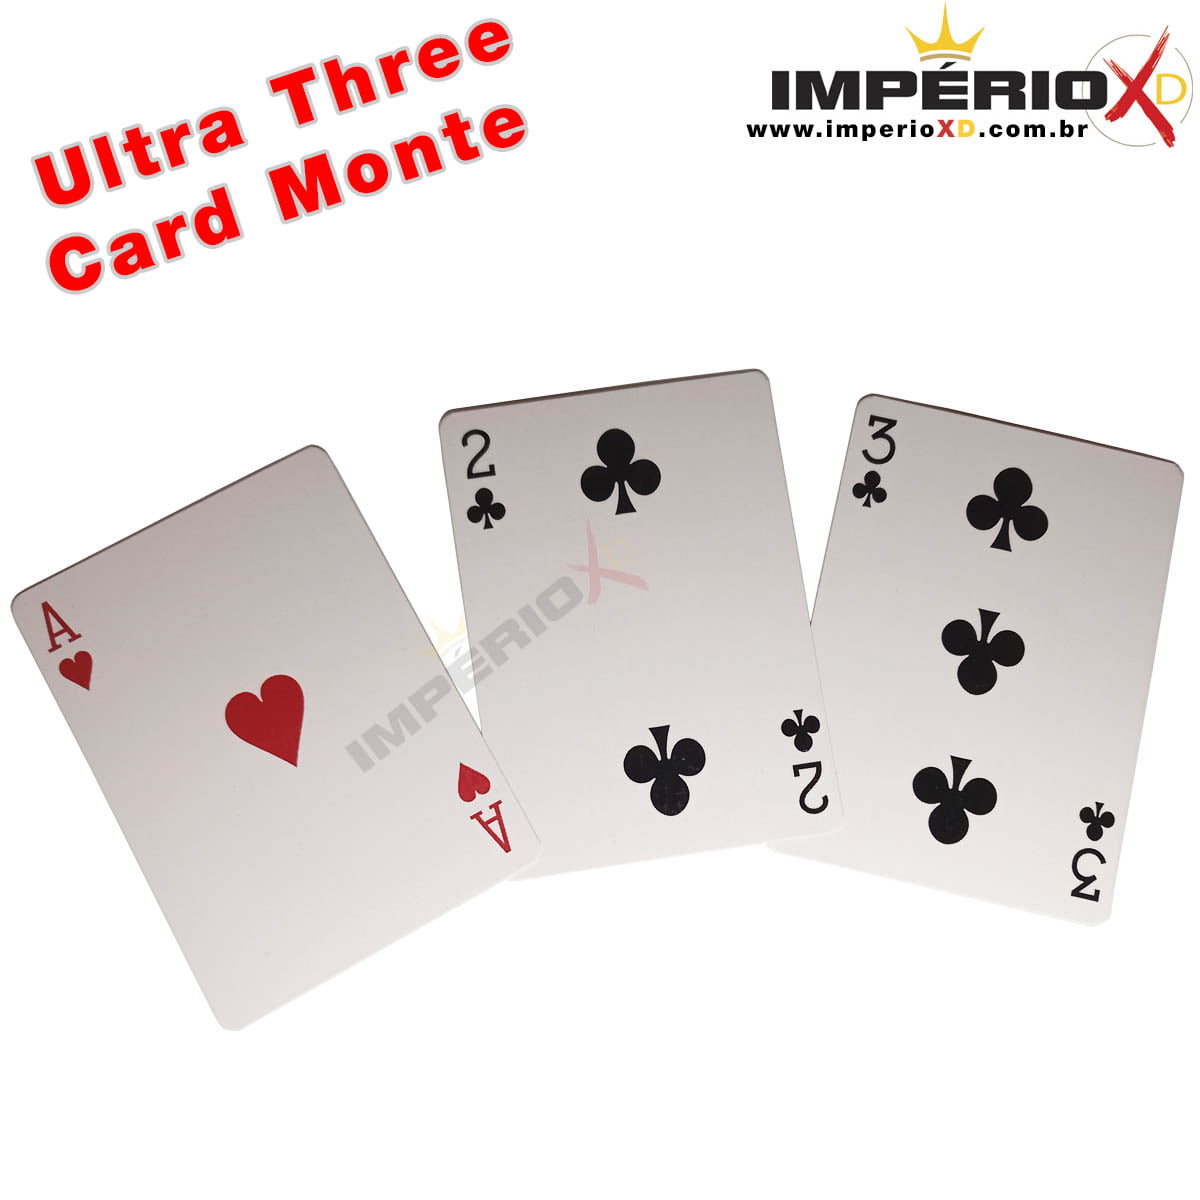 Ultra Three Card Monte